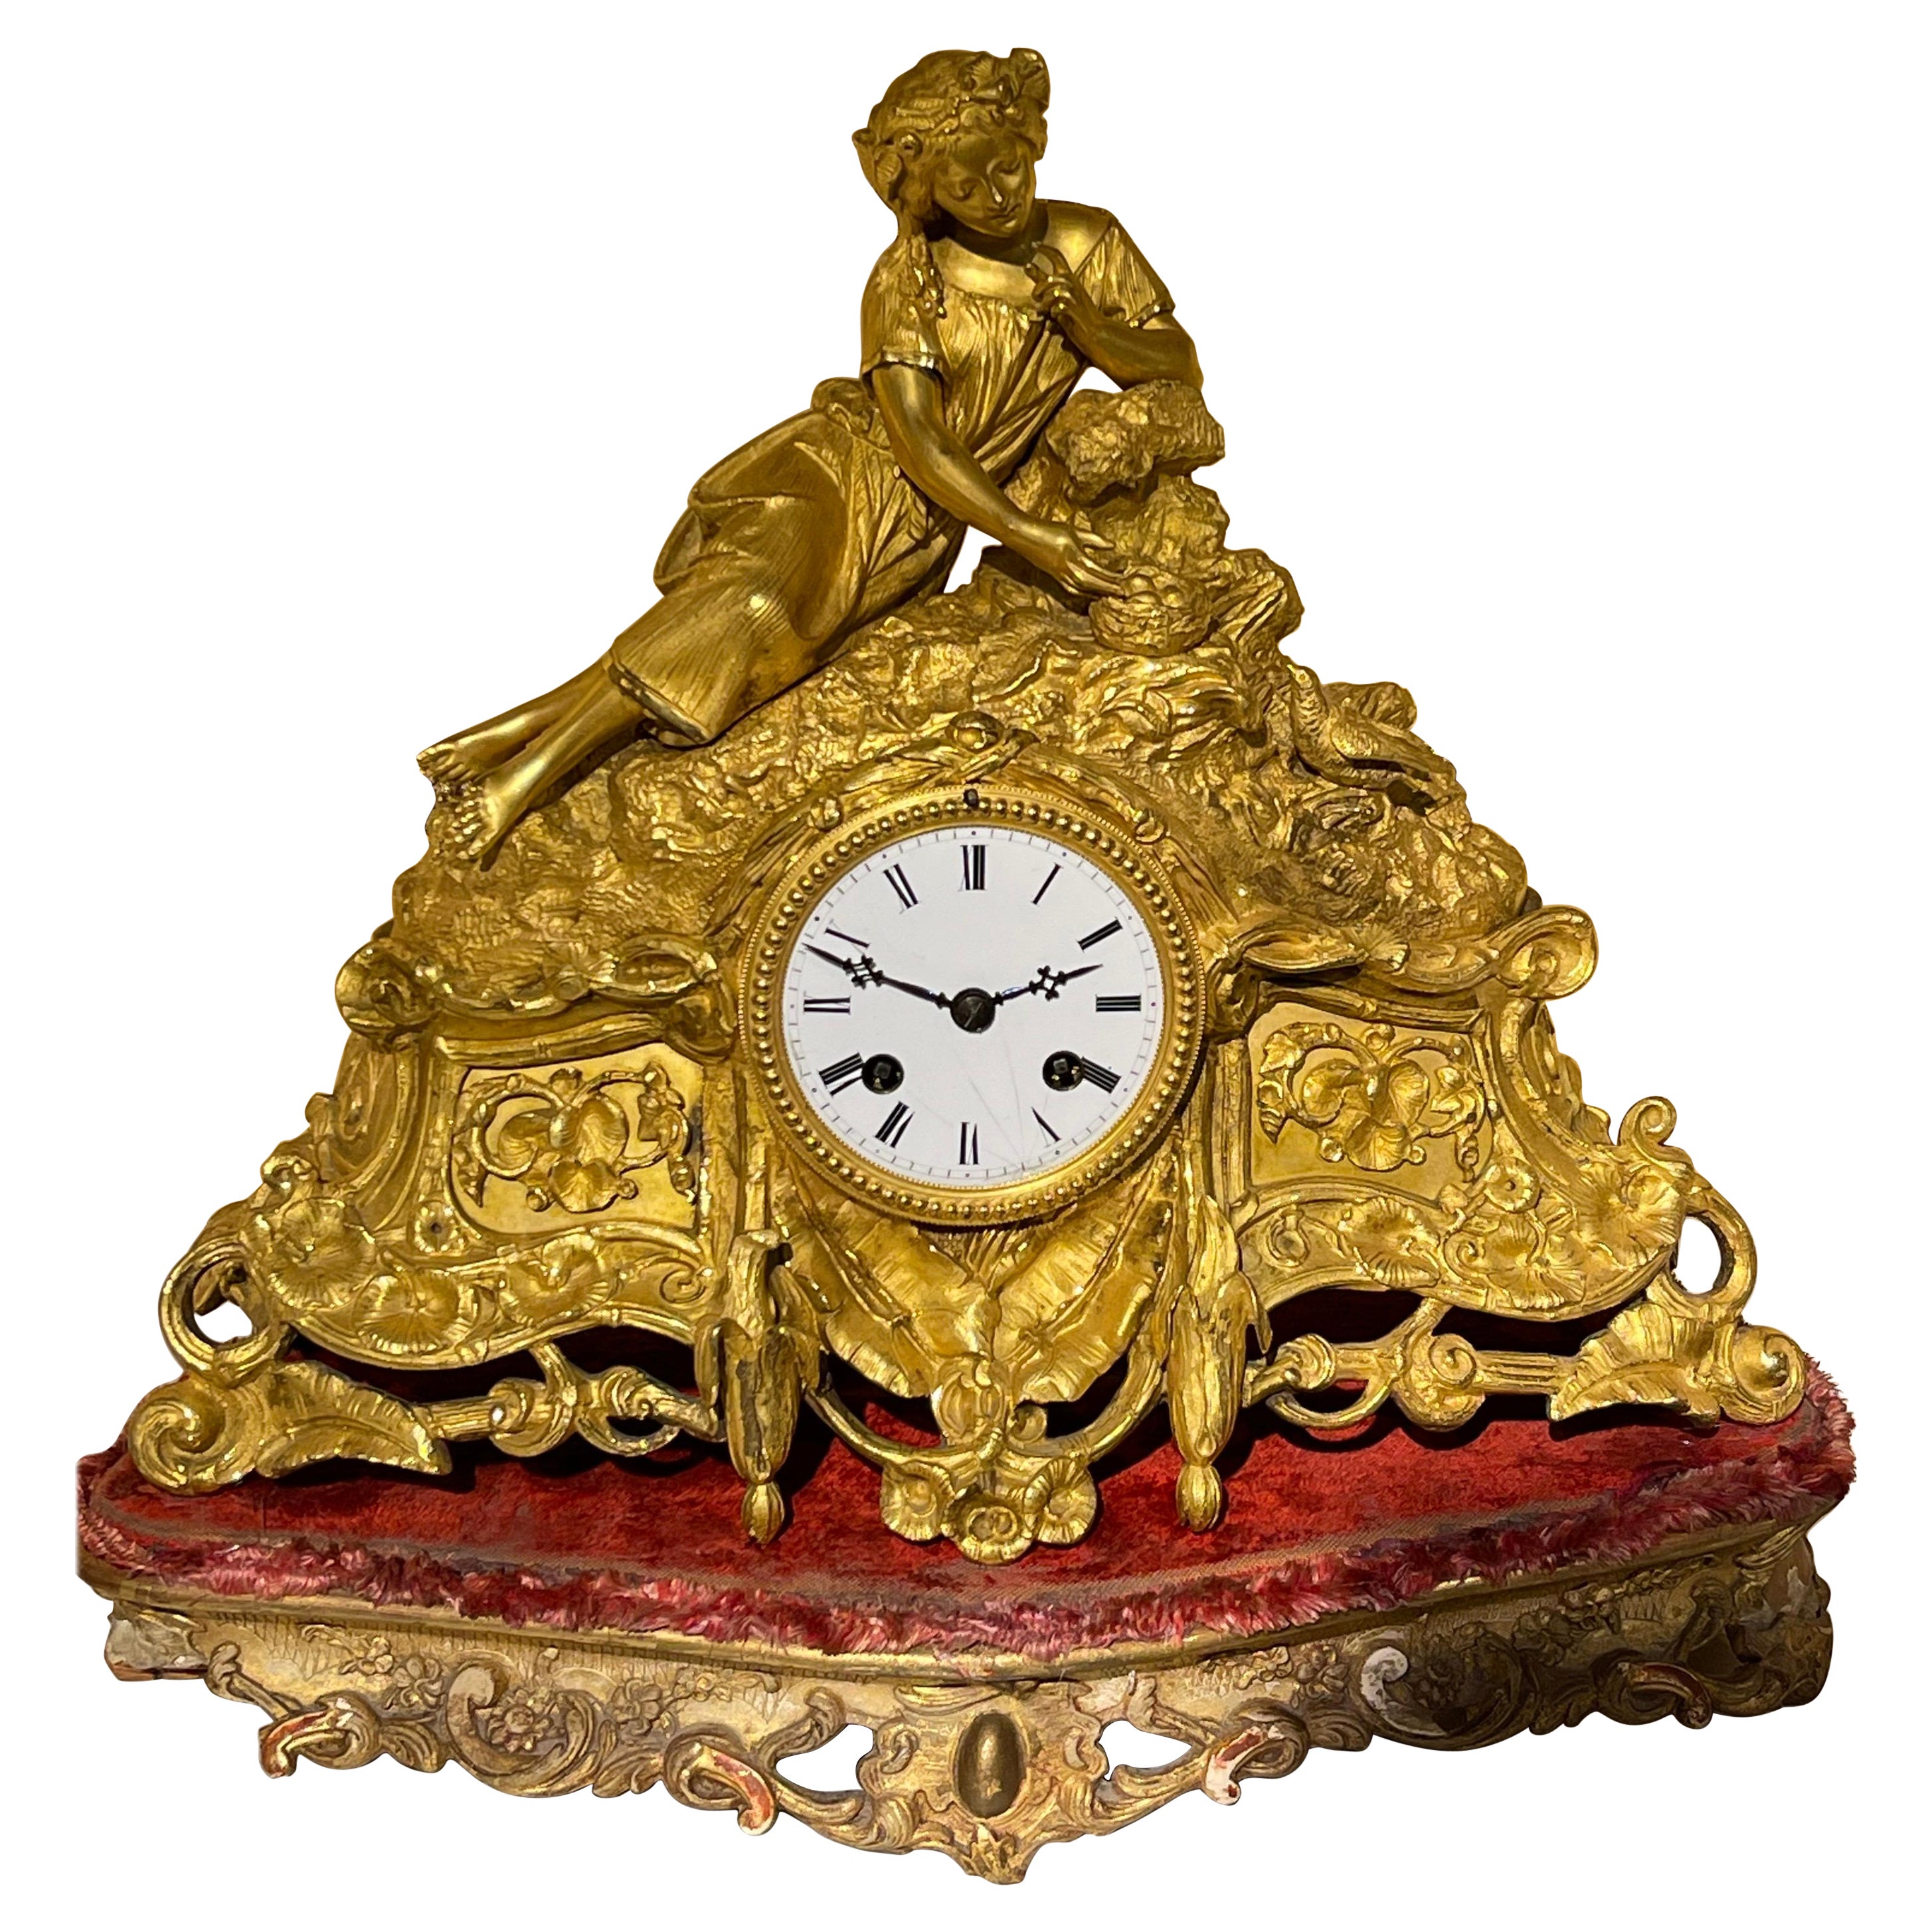 French Mantel Clock / Pendulum Clock, Fire-Gilt, Around 1870-1880